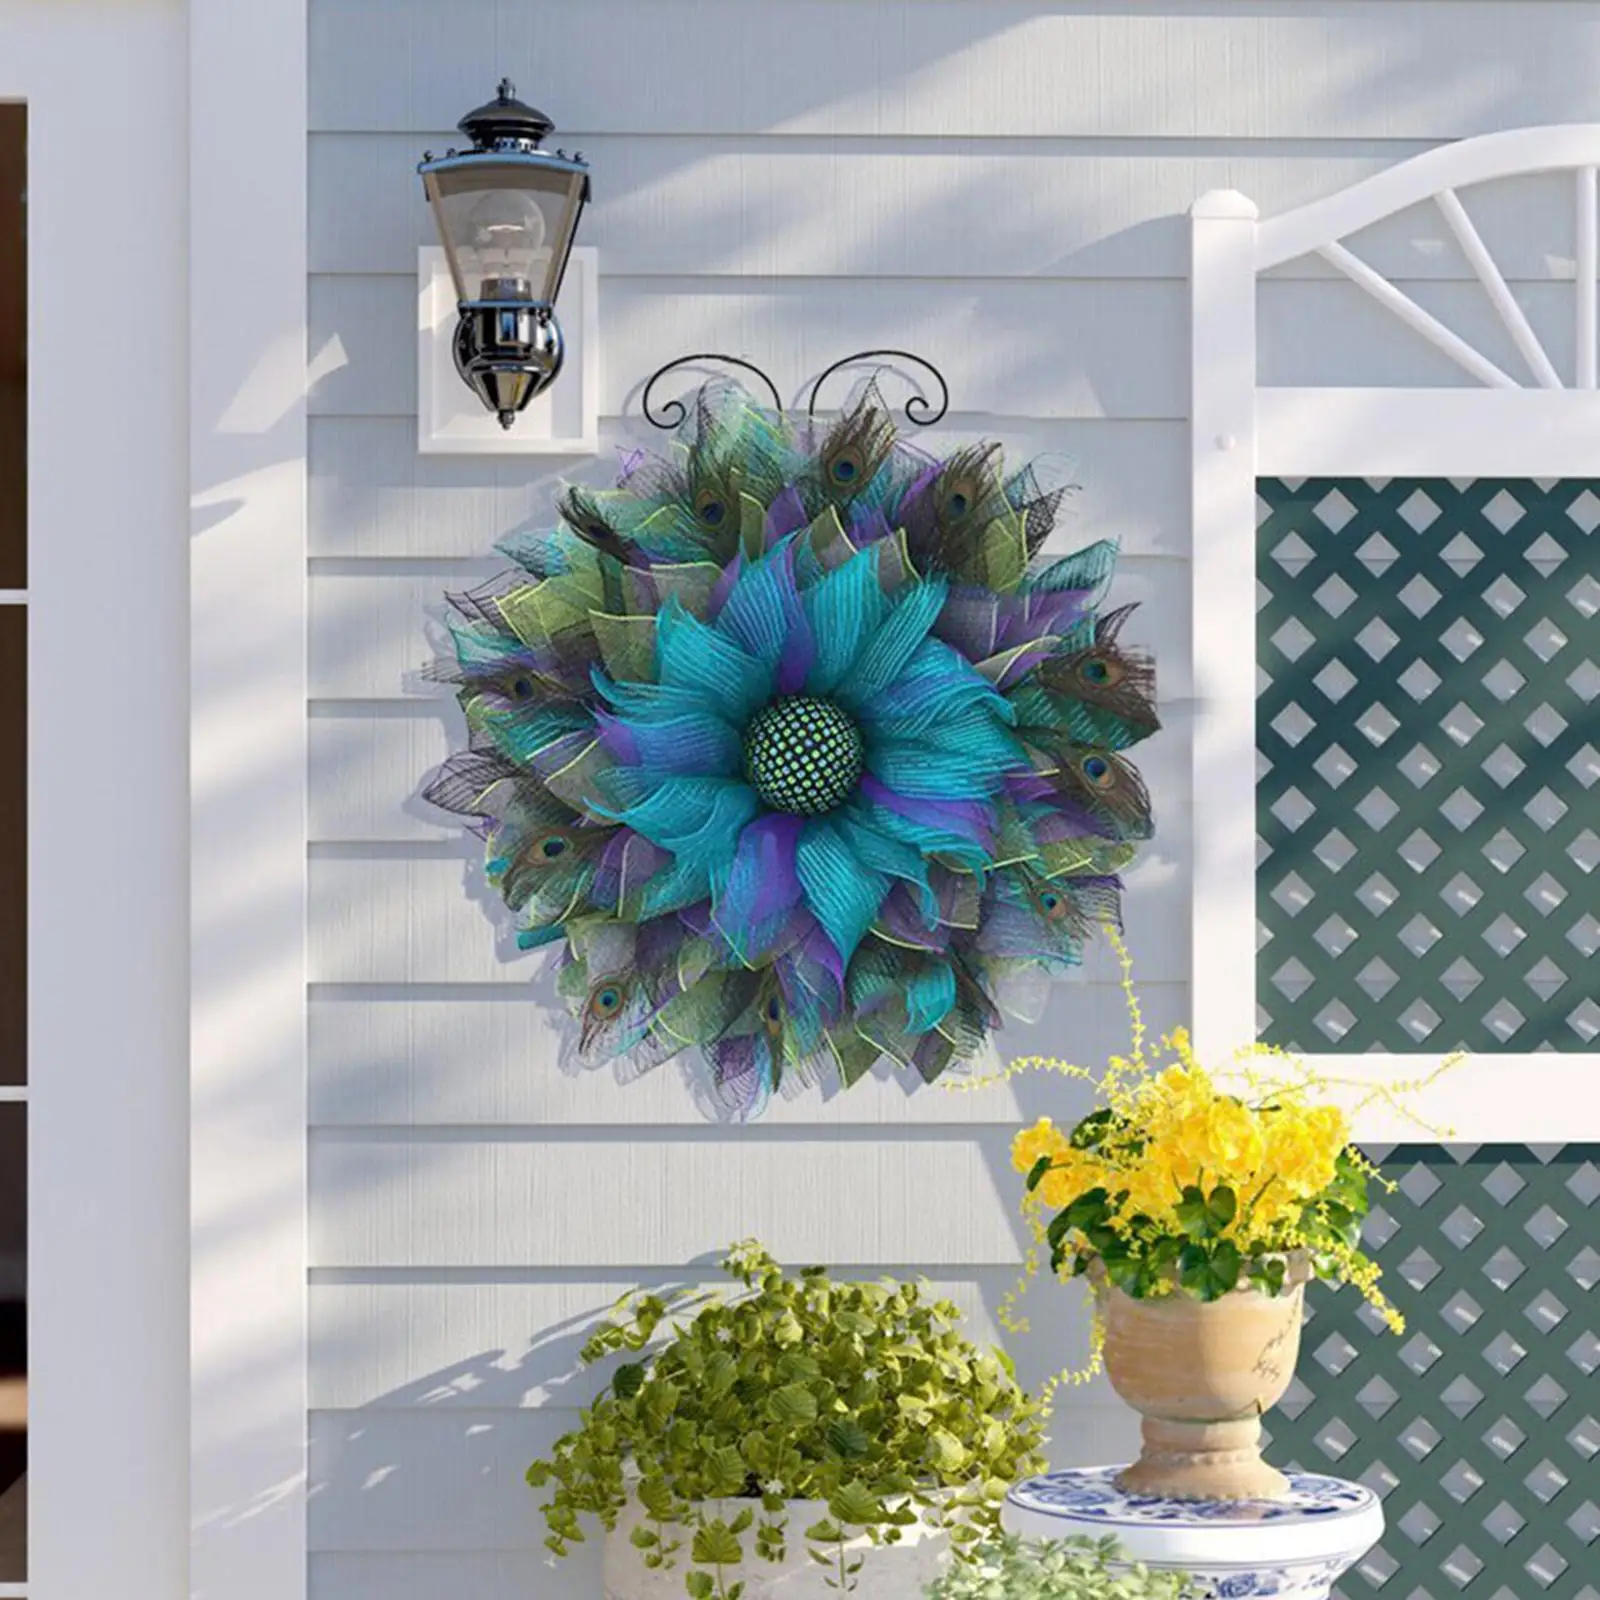 30cm Artificial Peacock Wreath Flower Garland for Front Door Wall Decorative